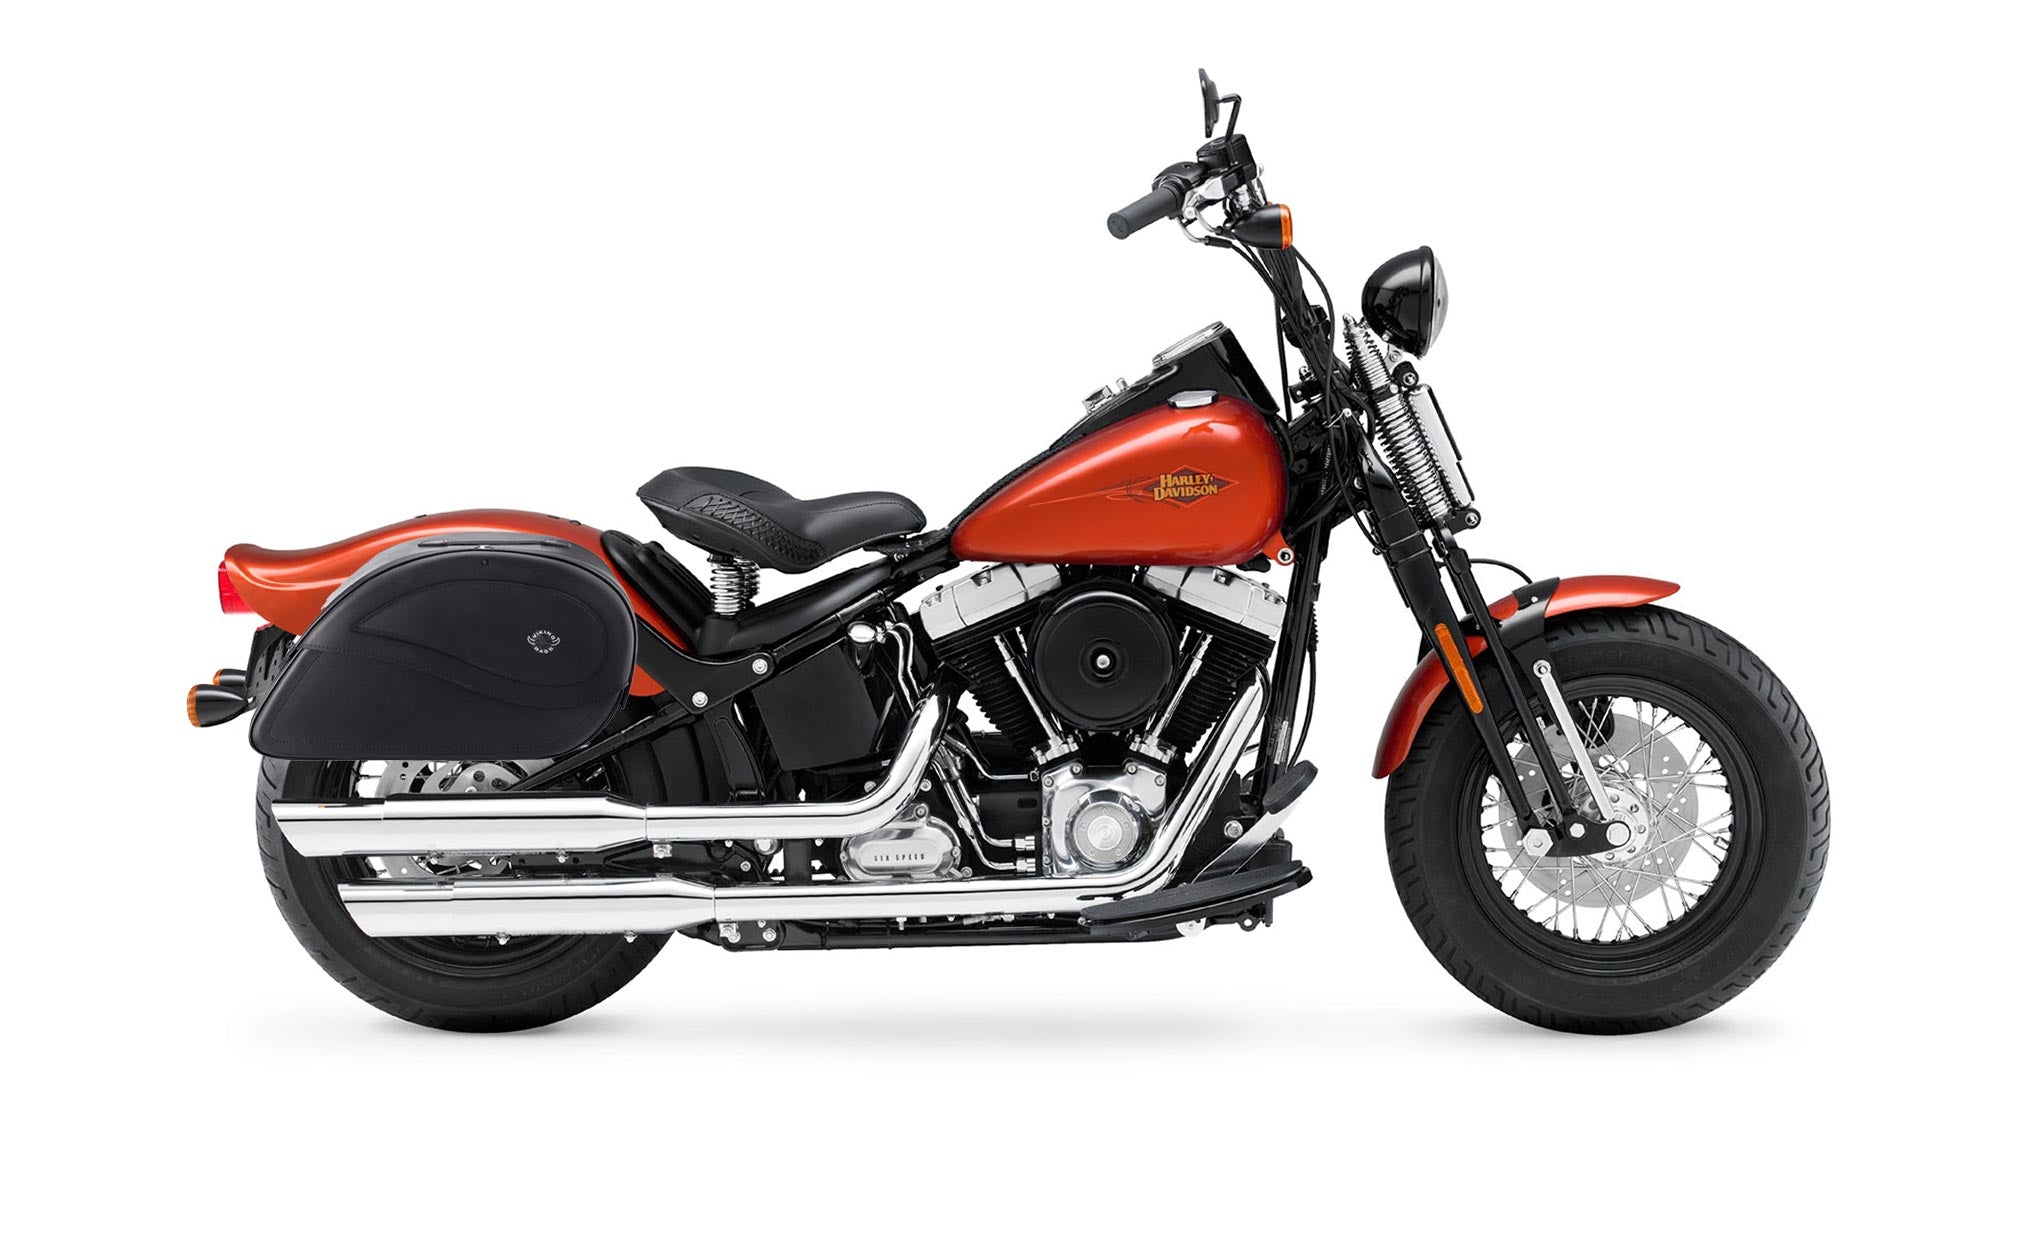 Viking Ultimate Large Leather Motorcycle Saddlebags For Harley Davidson Softail Cross Bones Flstsb on Bike Photo @expand